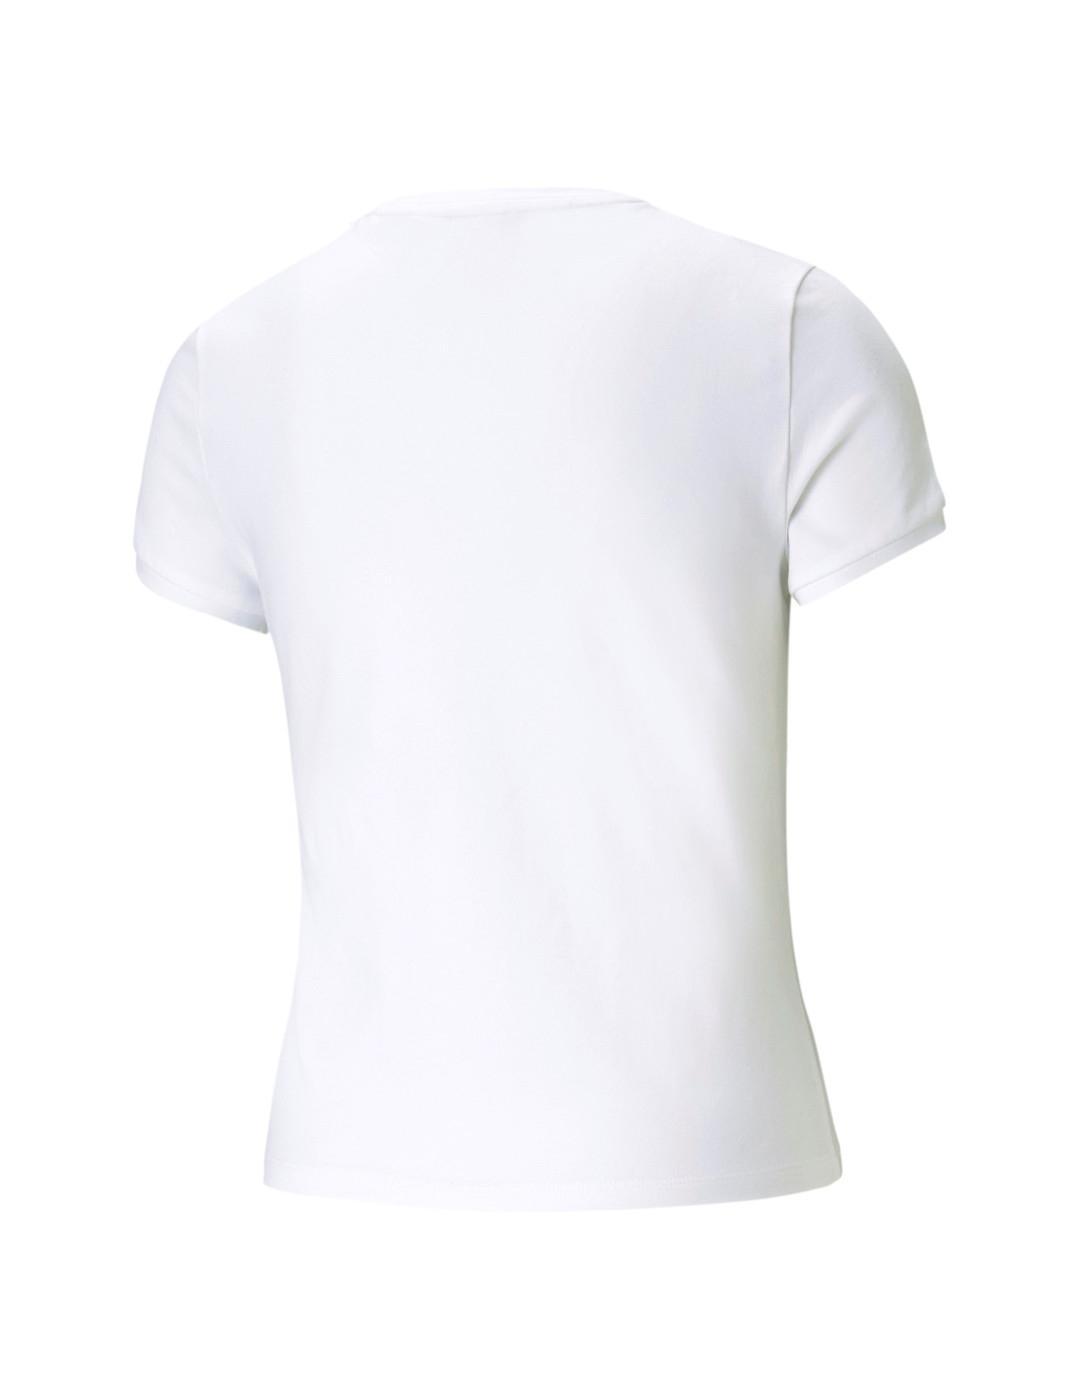 Camiseta Mujer Puma Classics Fitted Blanca